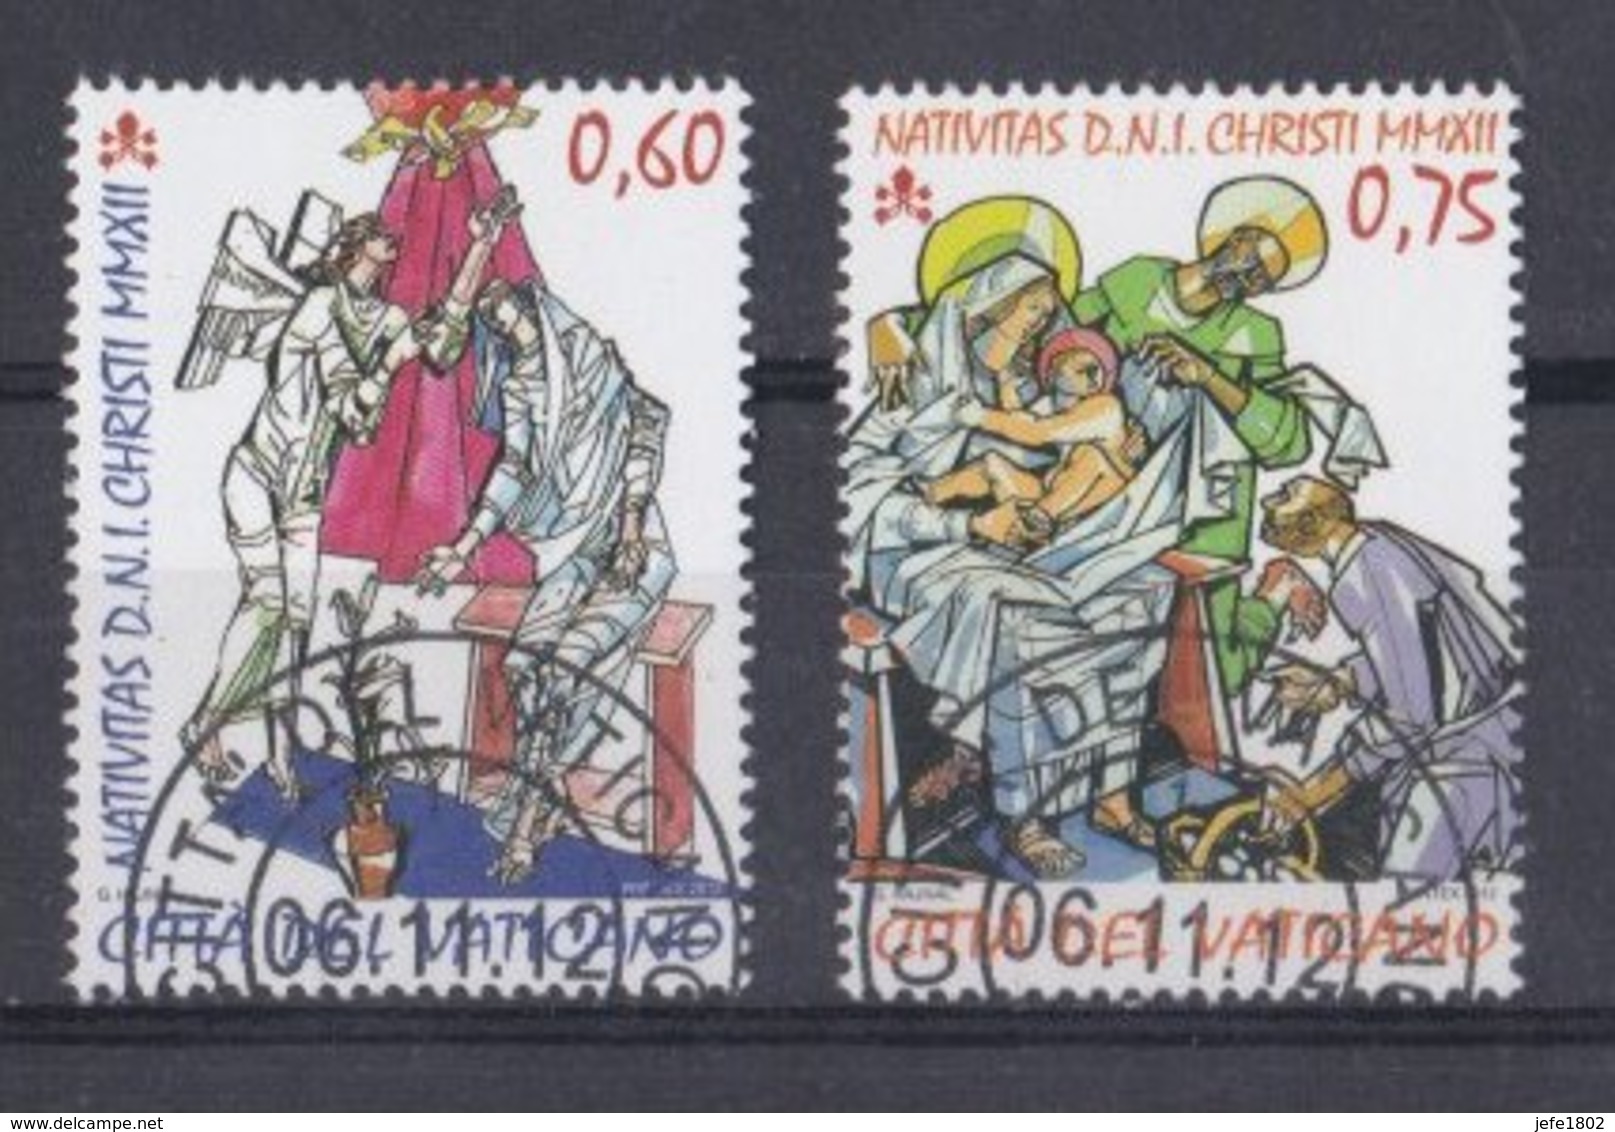 Citta Del Vaticano - Nativitas D.N.I. Christi MMXII - Used Stamps